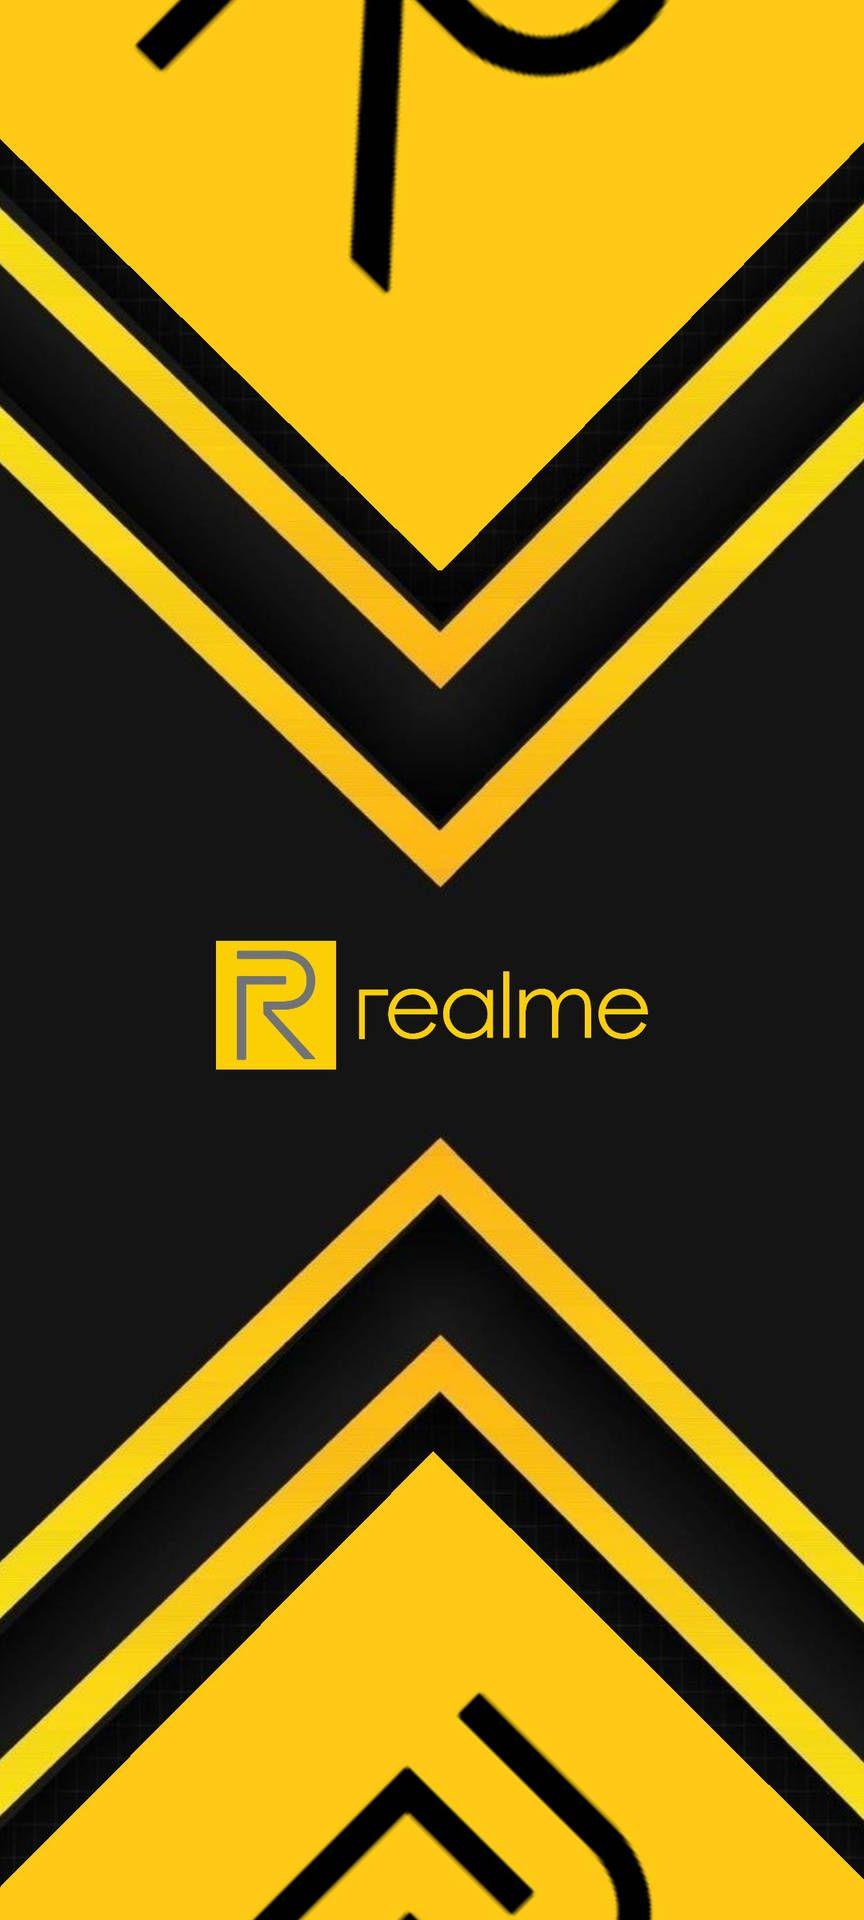 realme Logo - Download Realme Logo Two Points ...